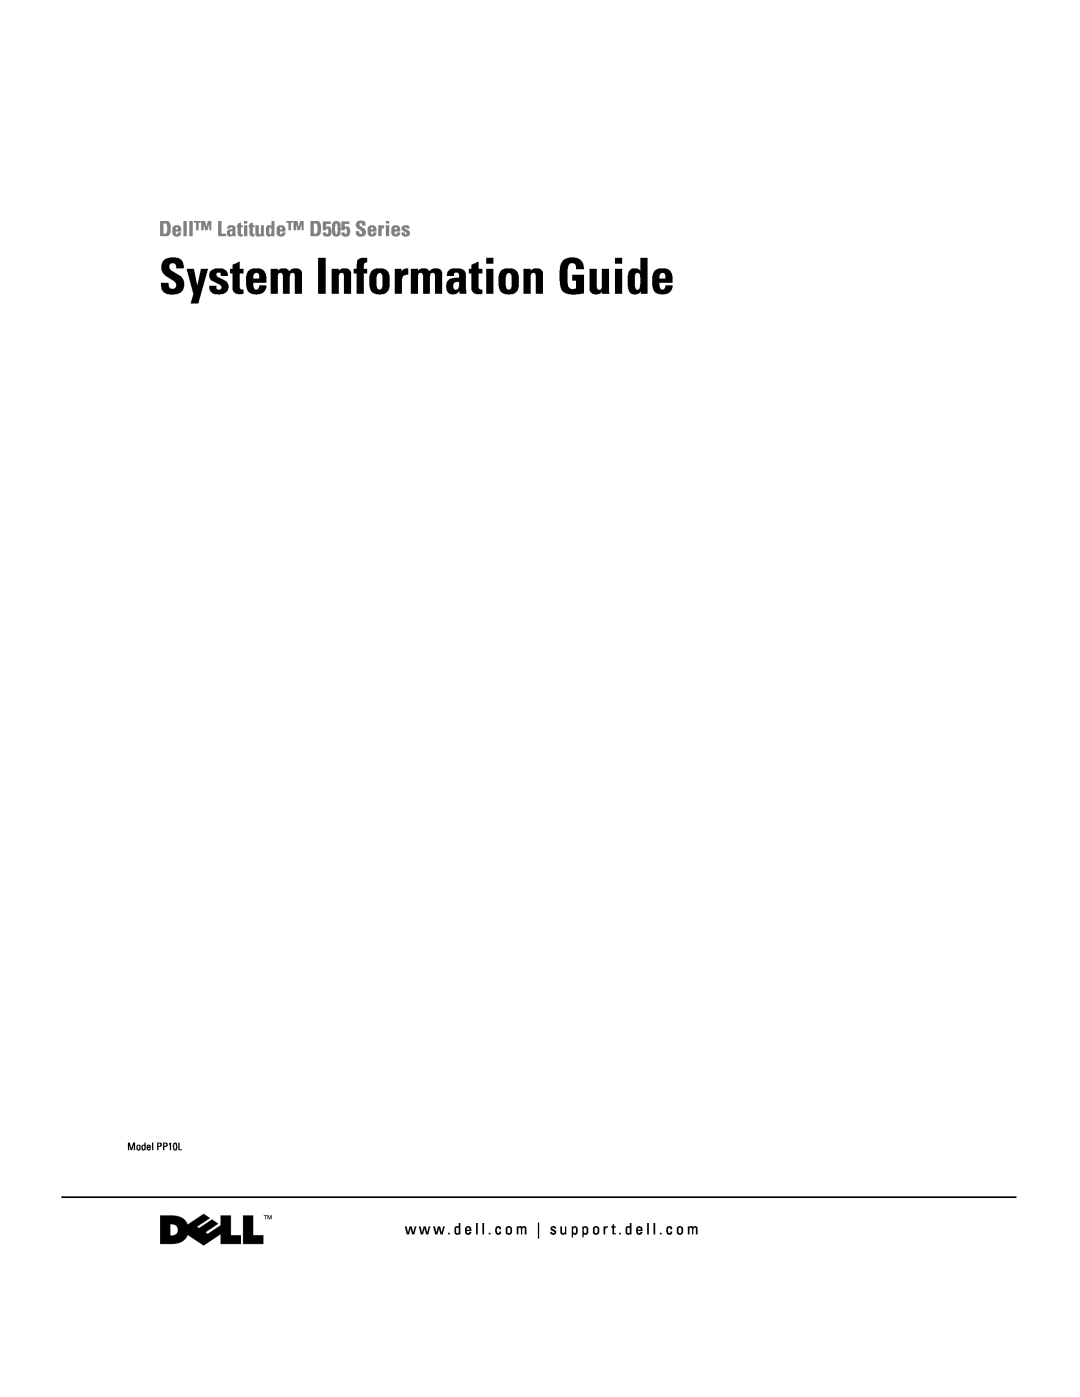 Dell manual System Information Guide, Dell Latitude D505 Series, Model PP10L 